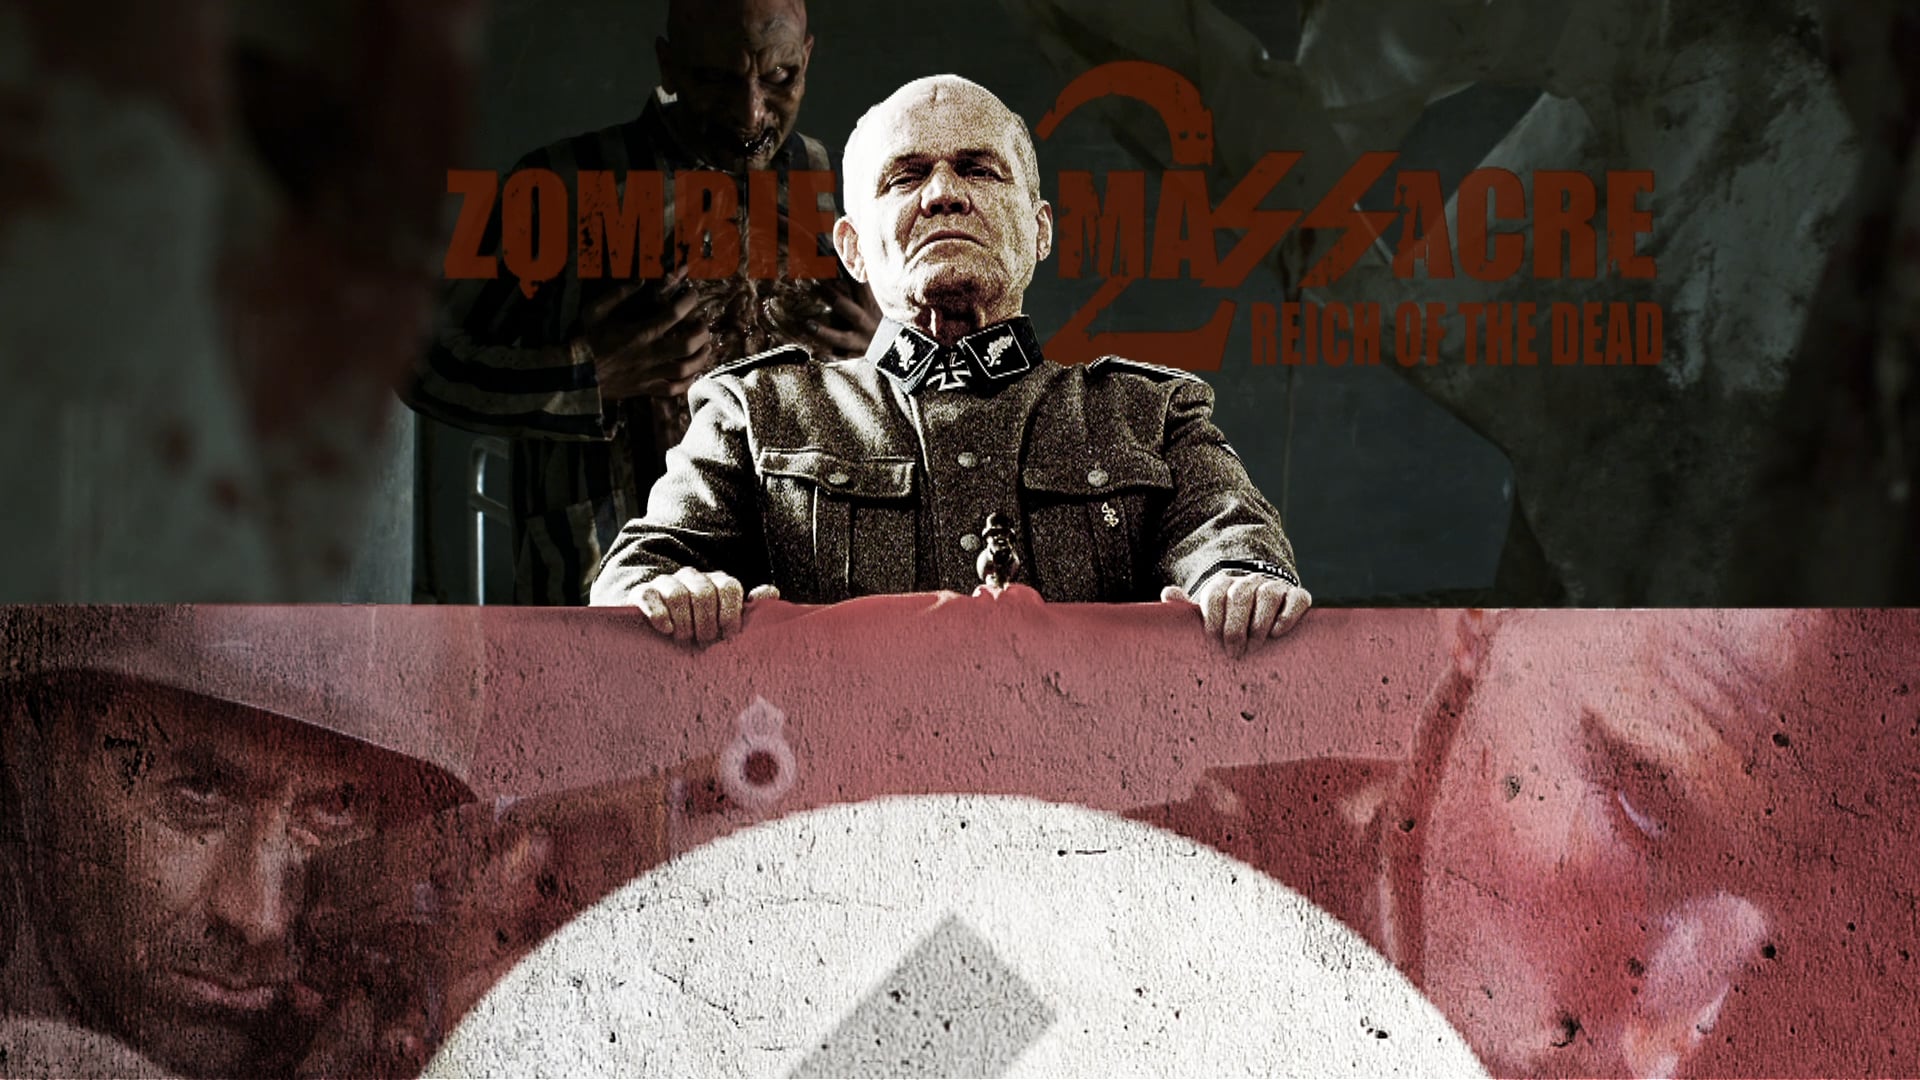 Zombie Massacre 2: Reich of the Dead 2015 123movies